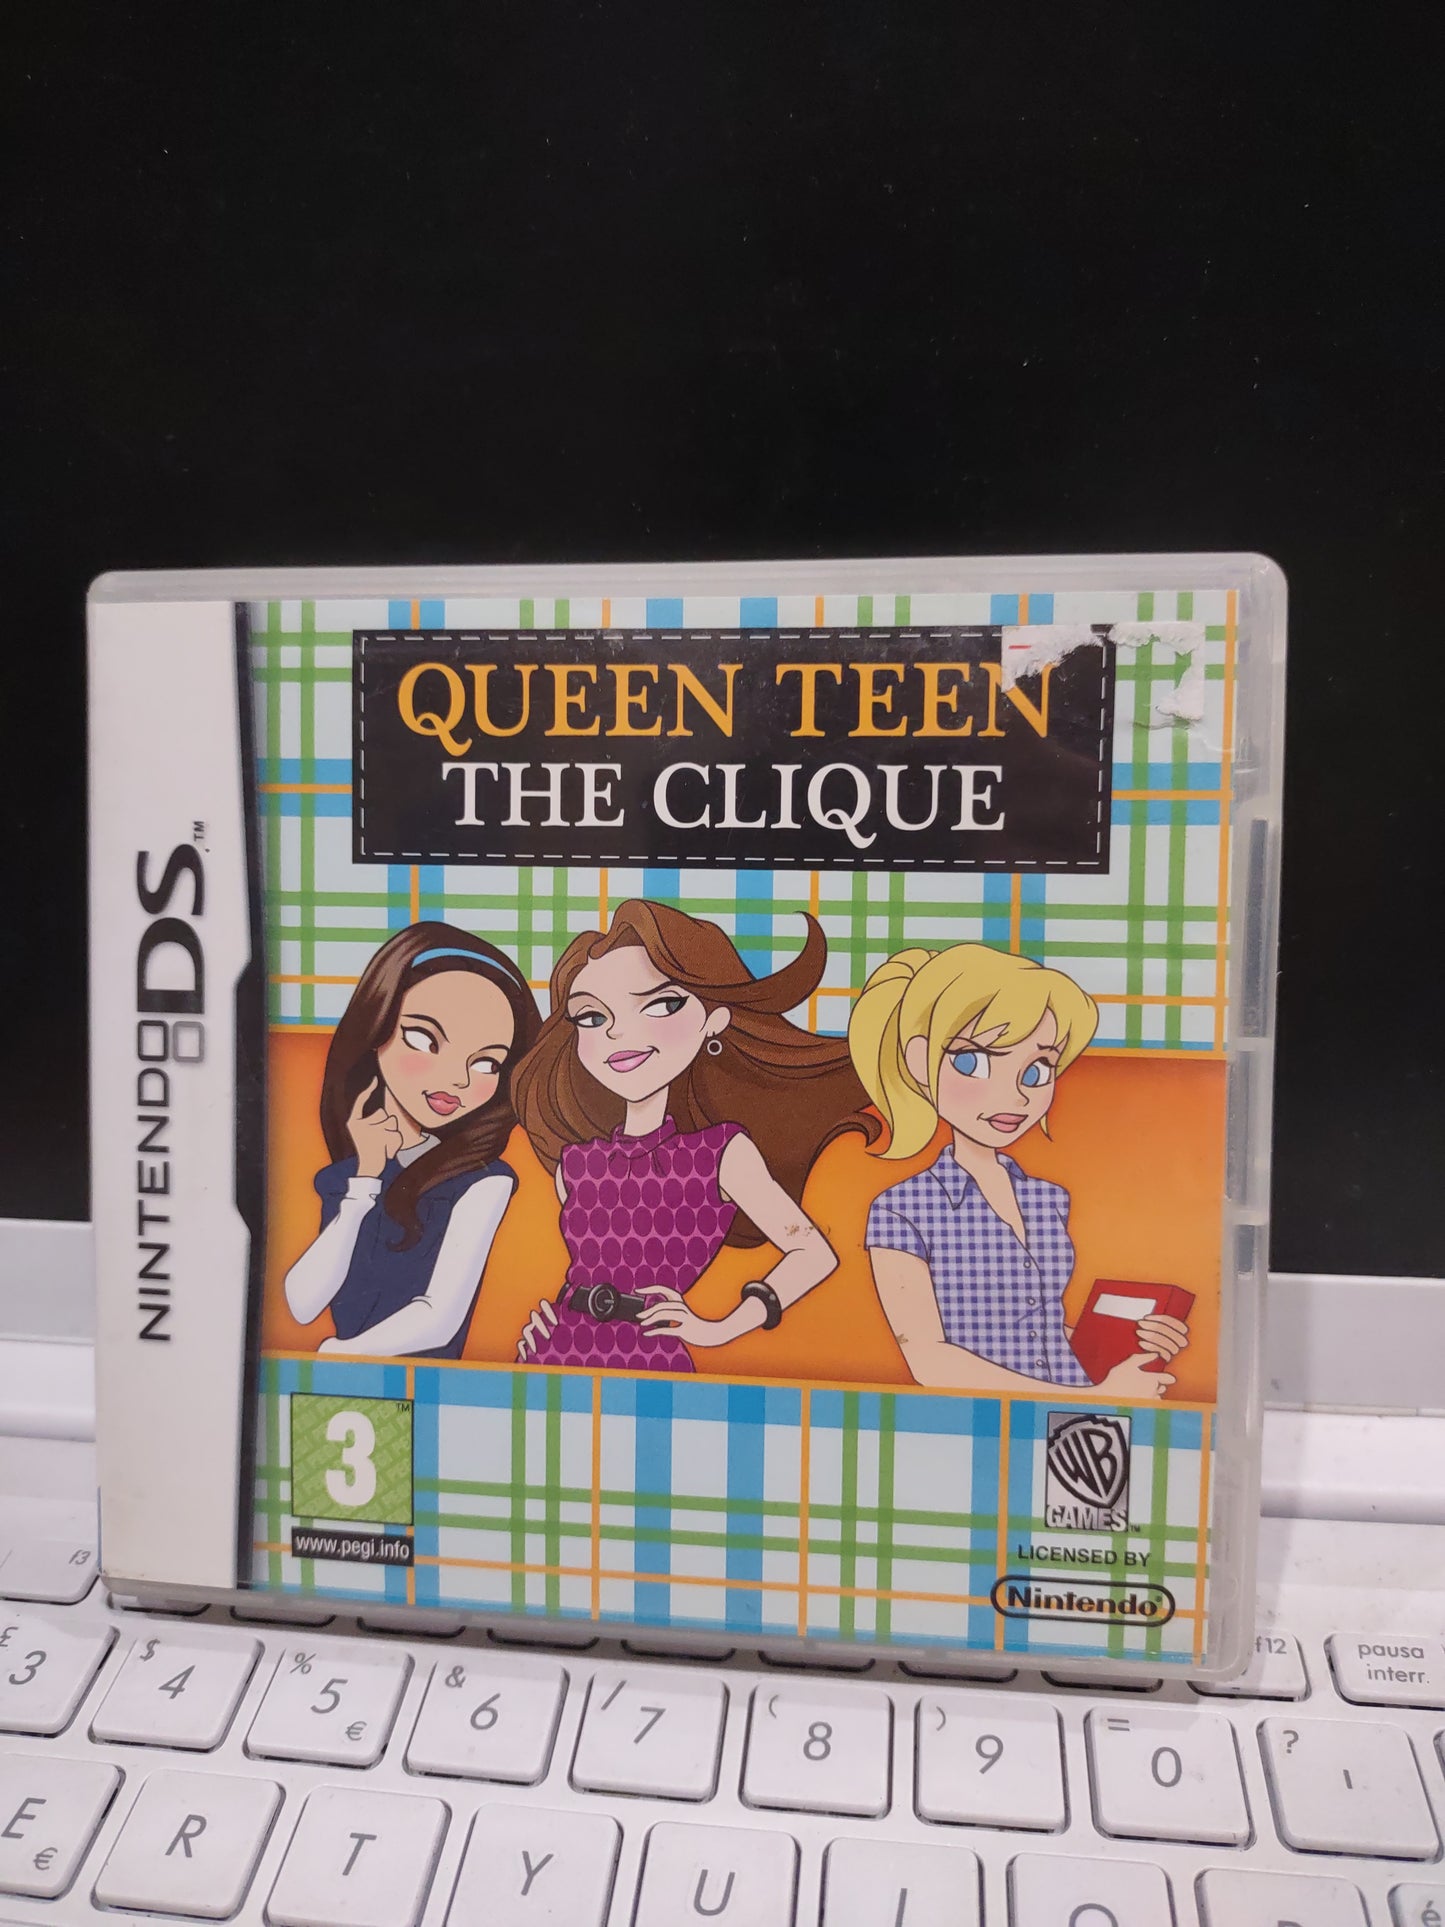 Nintendo Ds Queen teen the clique